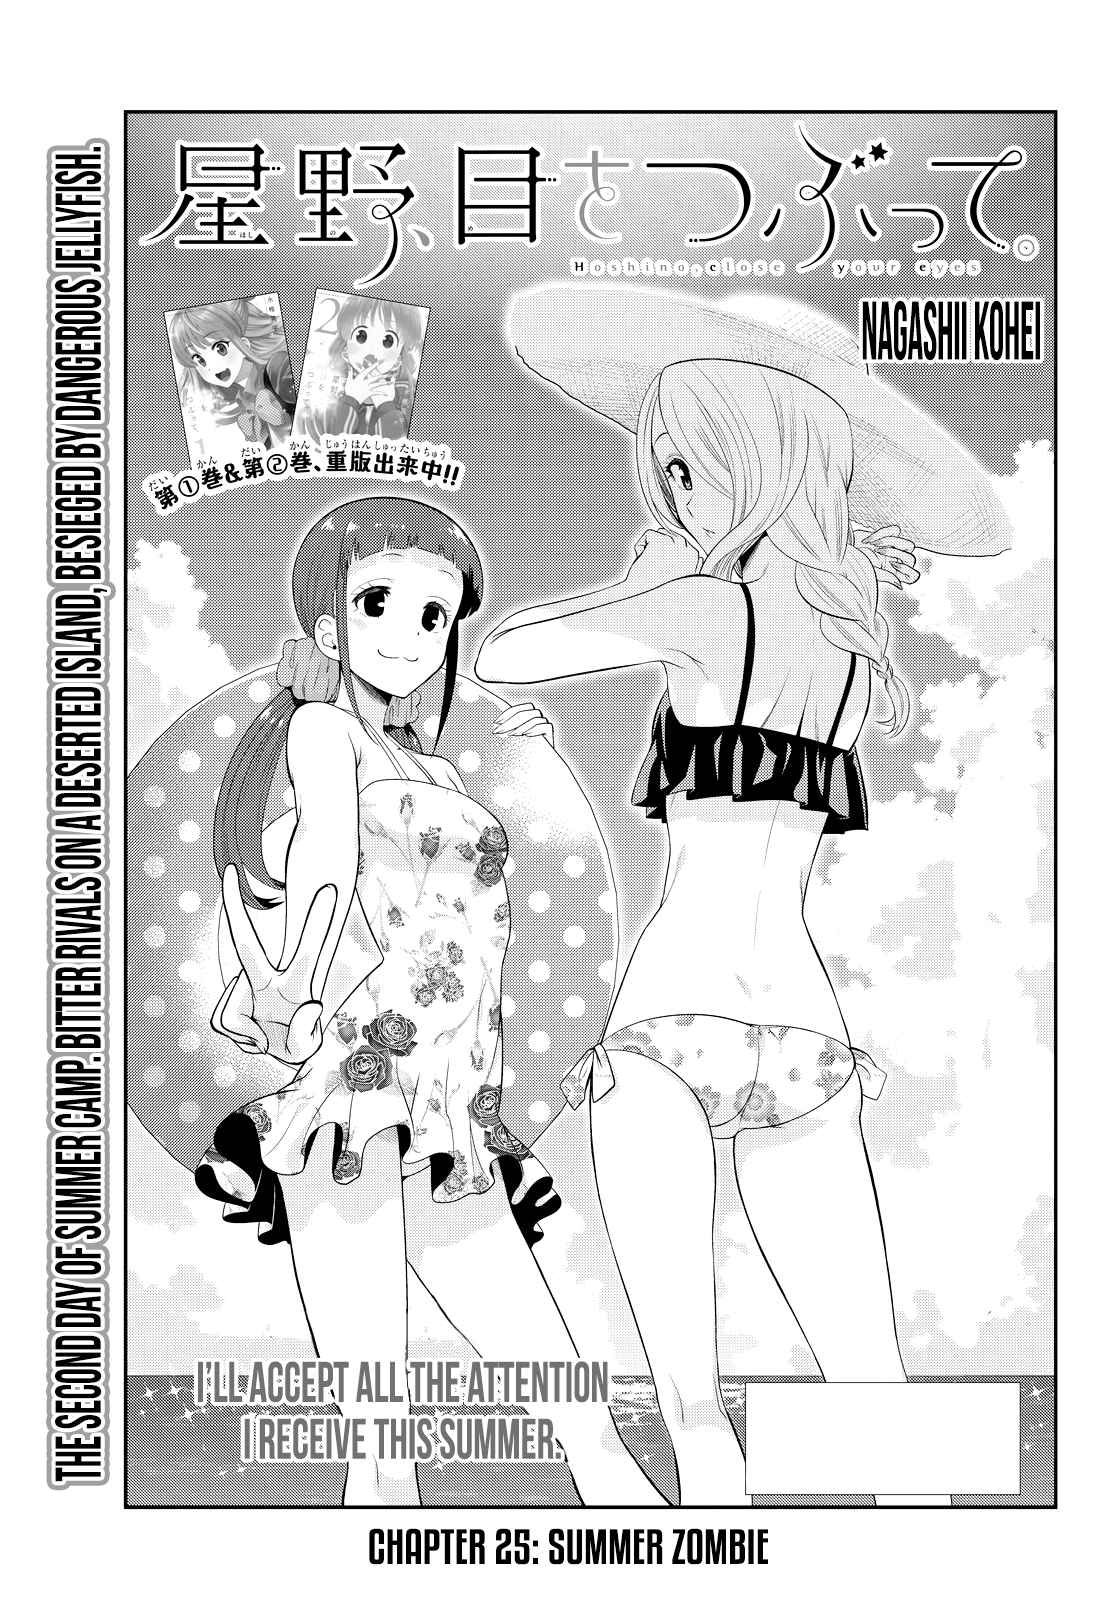 Hoshino, Me O Tsubutte Vol. 4 Ch. 25 Summer Zombie